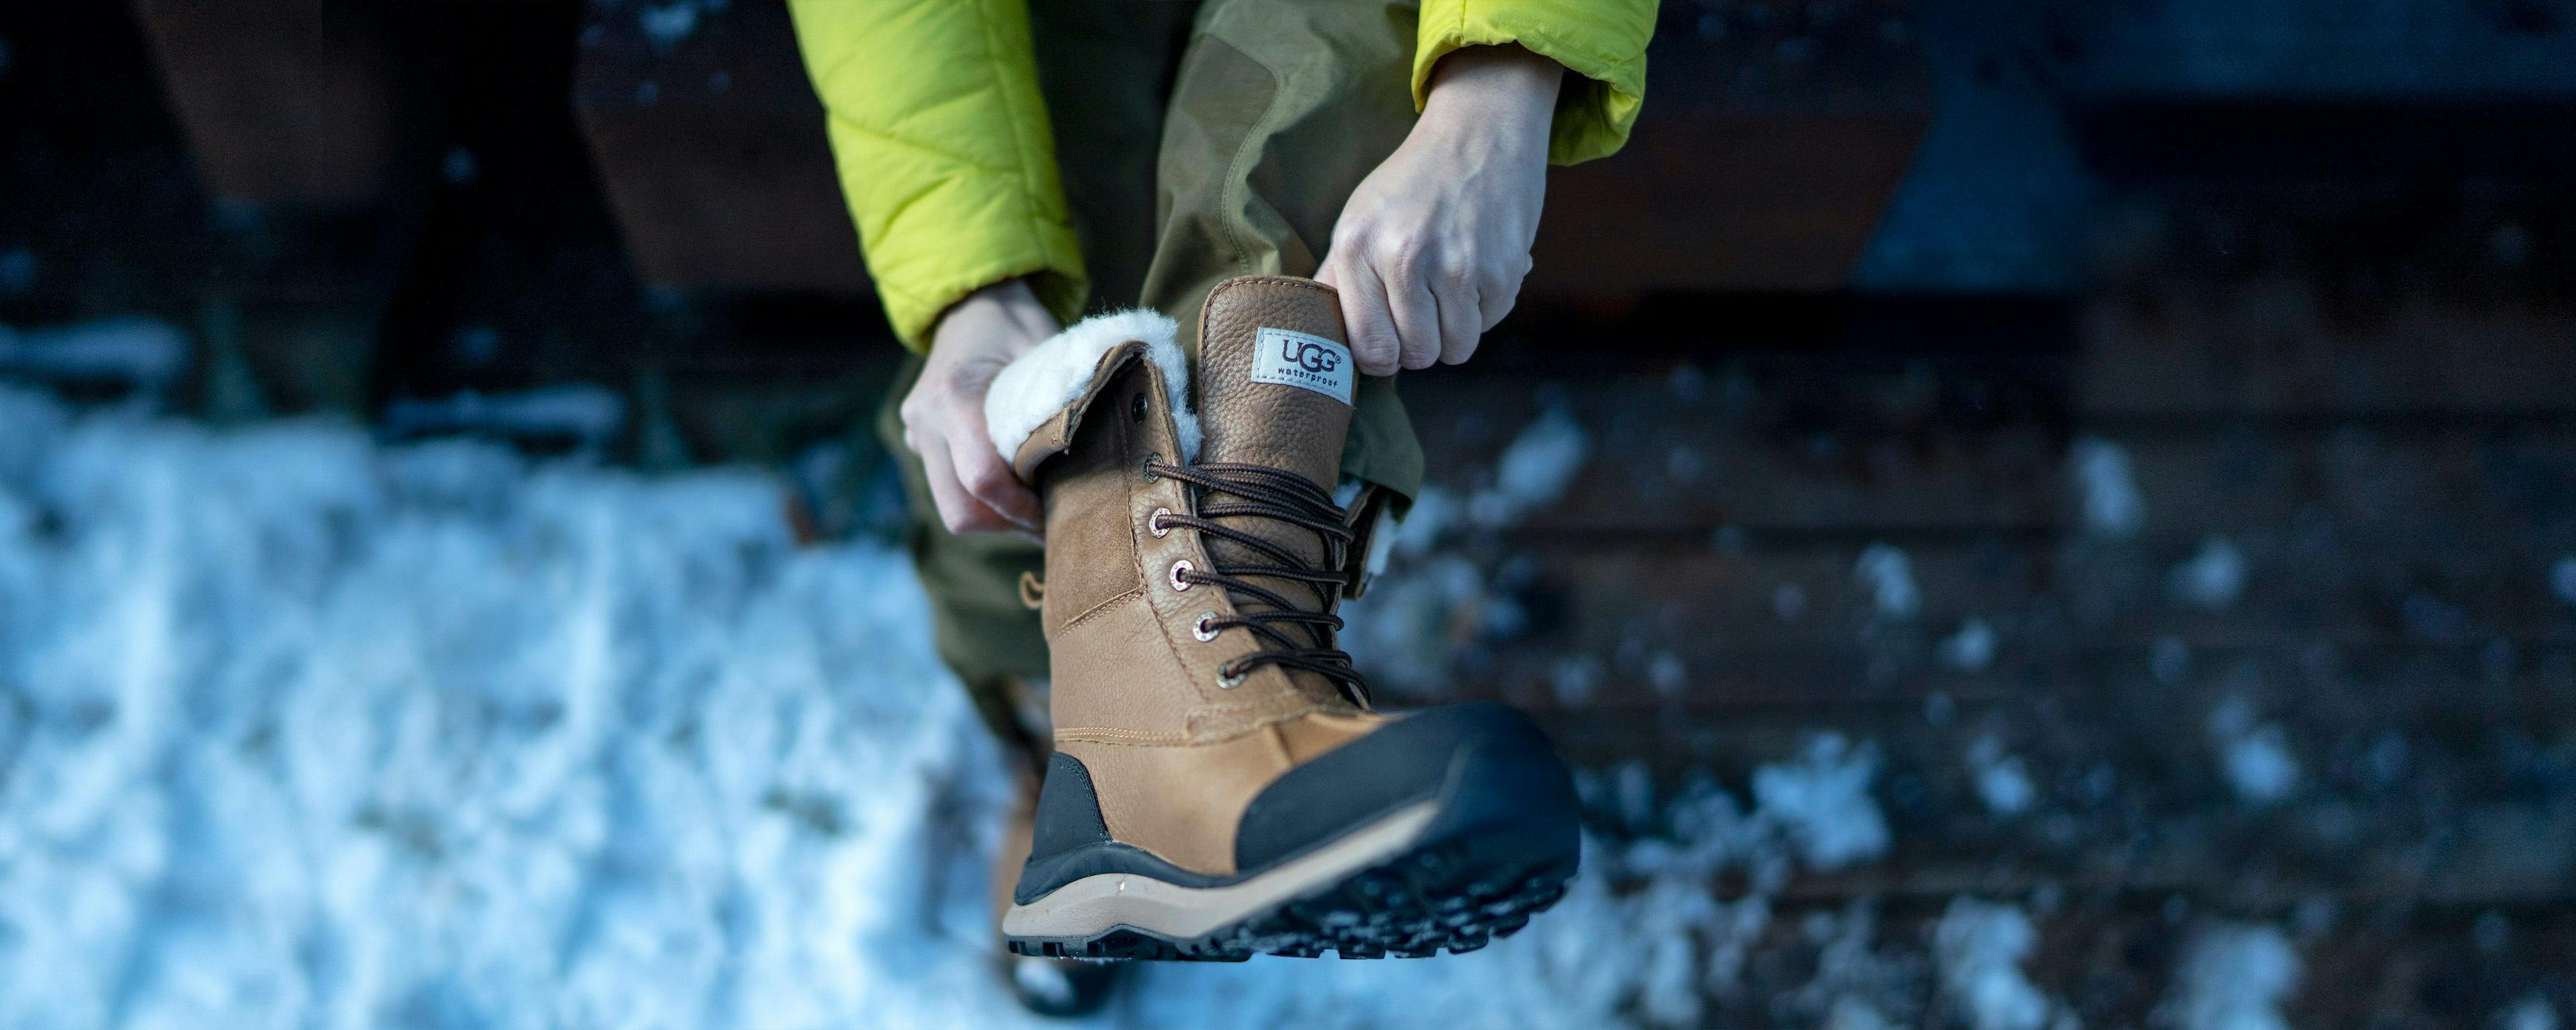 Winter boot guide: warm, waterproof and versatile